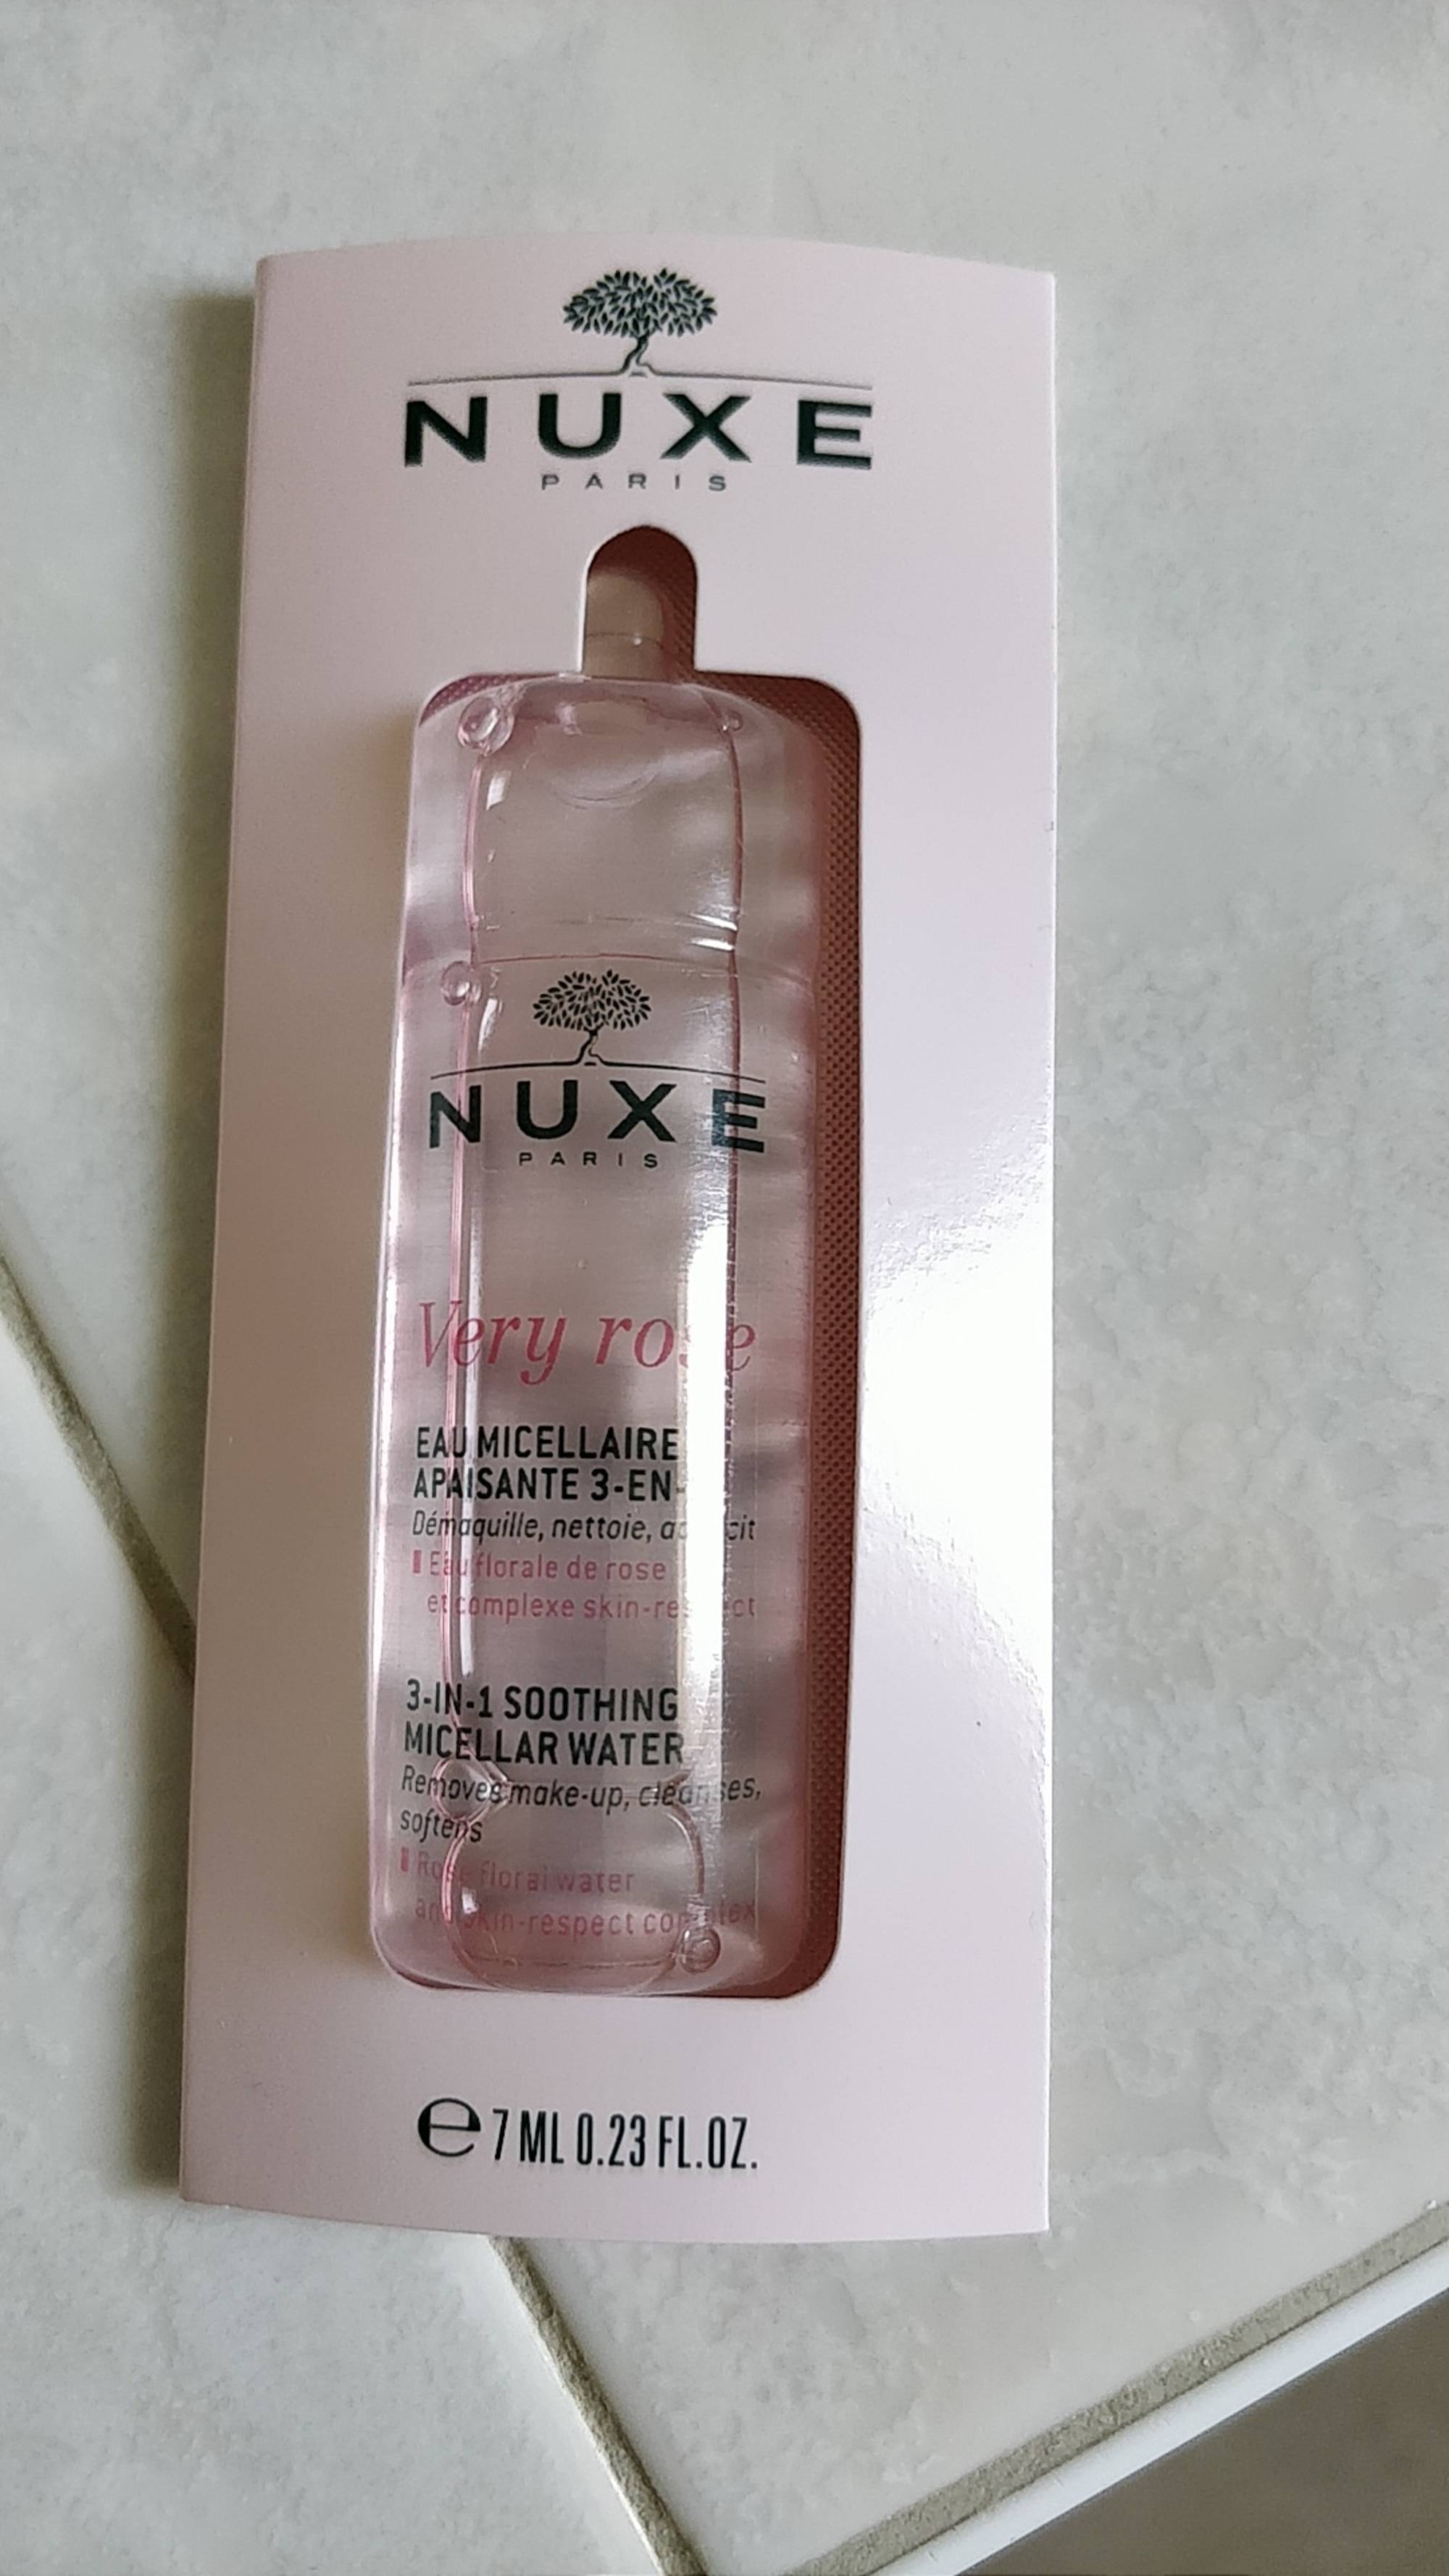 NUXE - Very rose - Eau micellaire apaisant 3-en-1